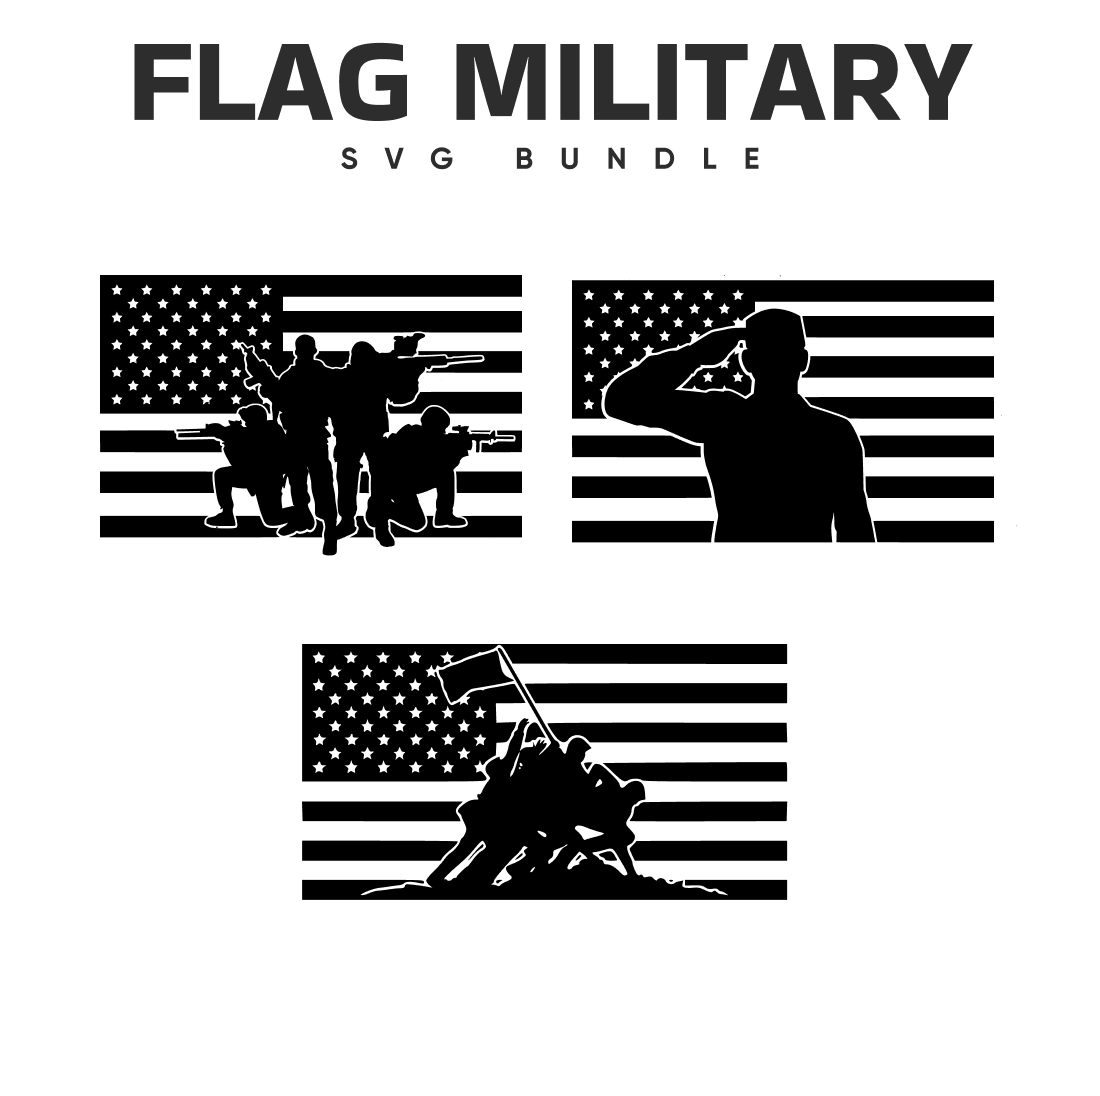 Flag Military SVG Bundle.